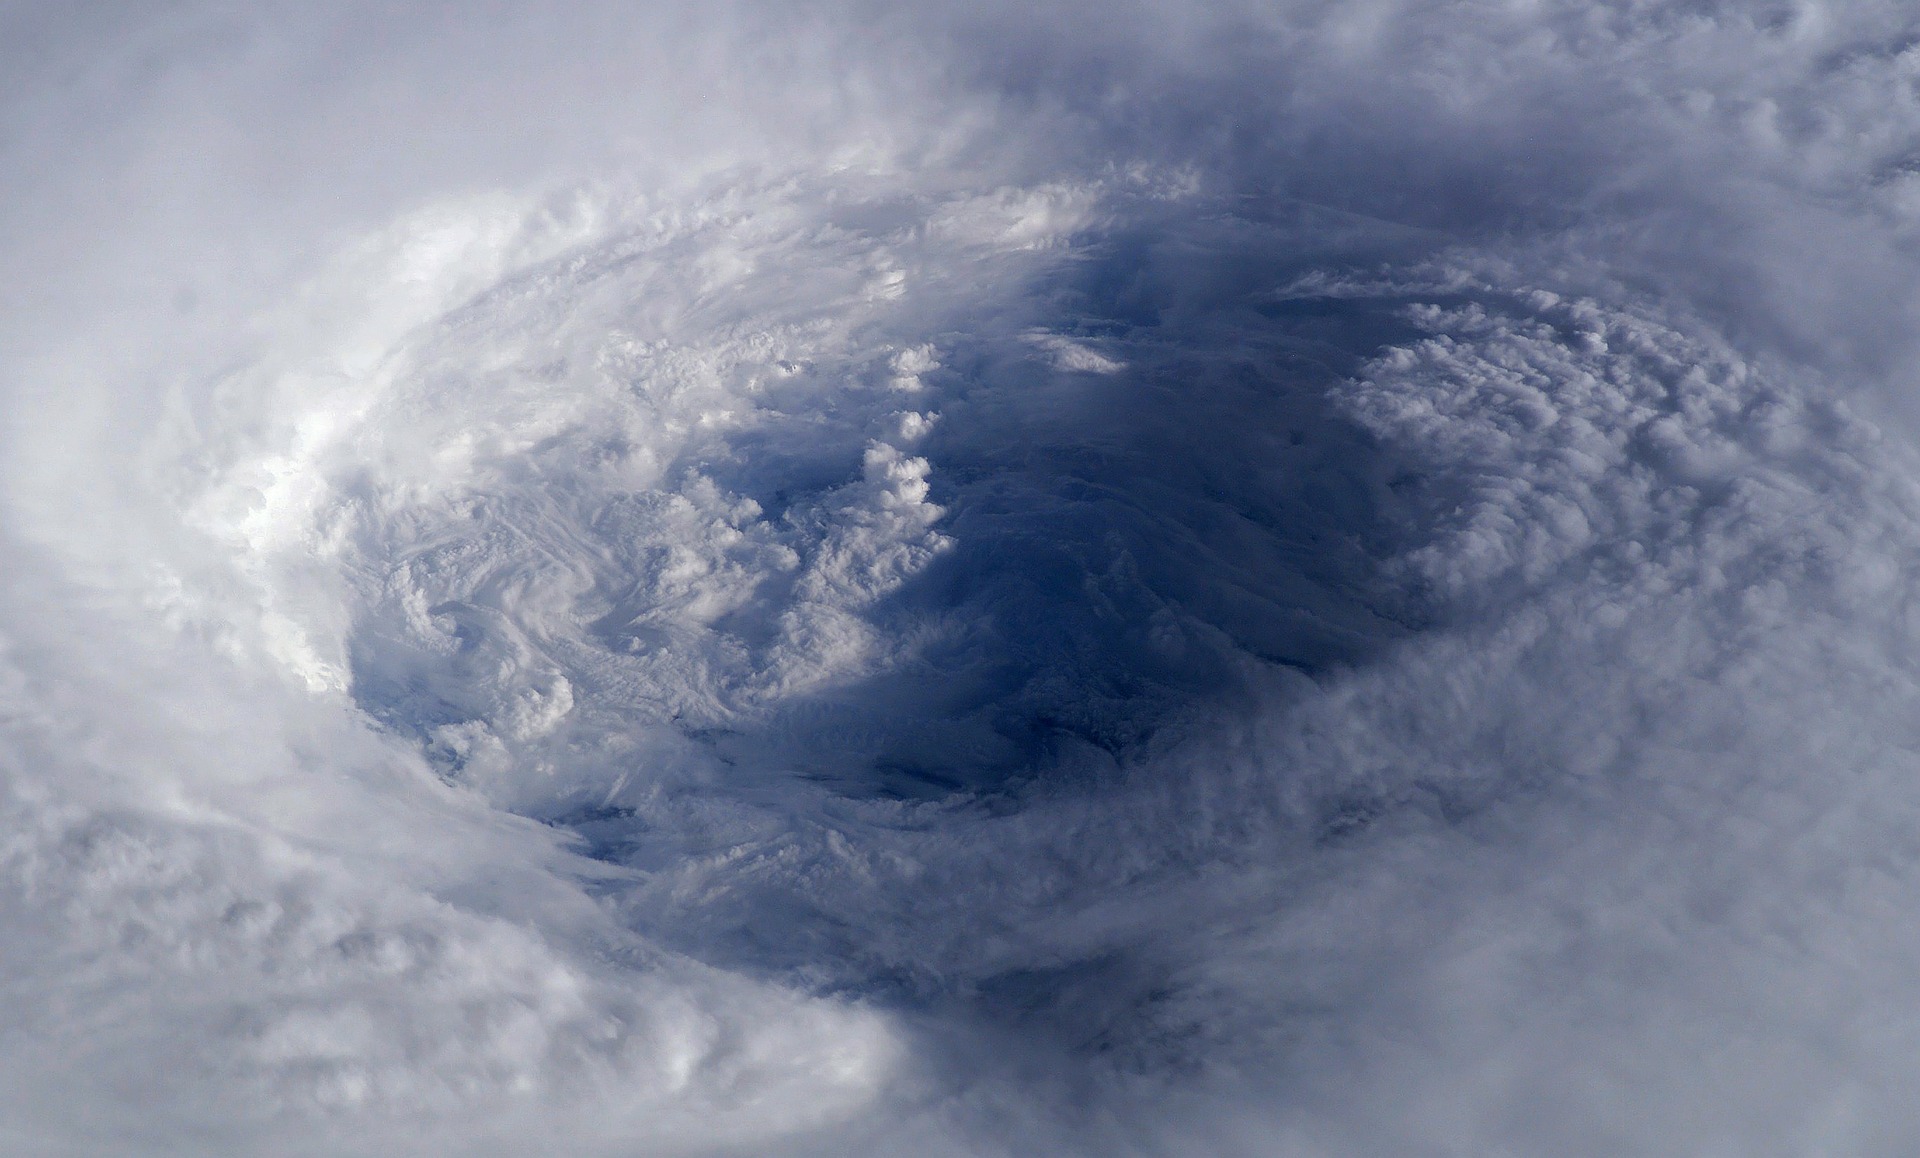 Research brief: Hybrid Cyclones in the Australian Region